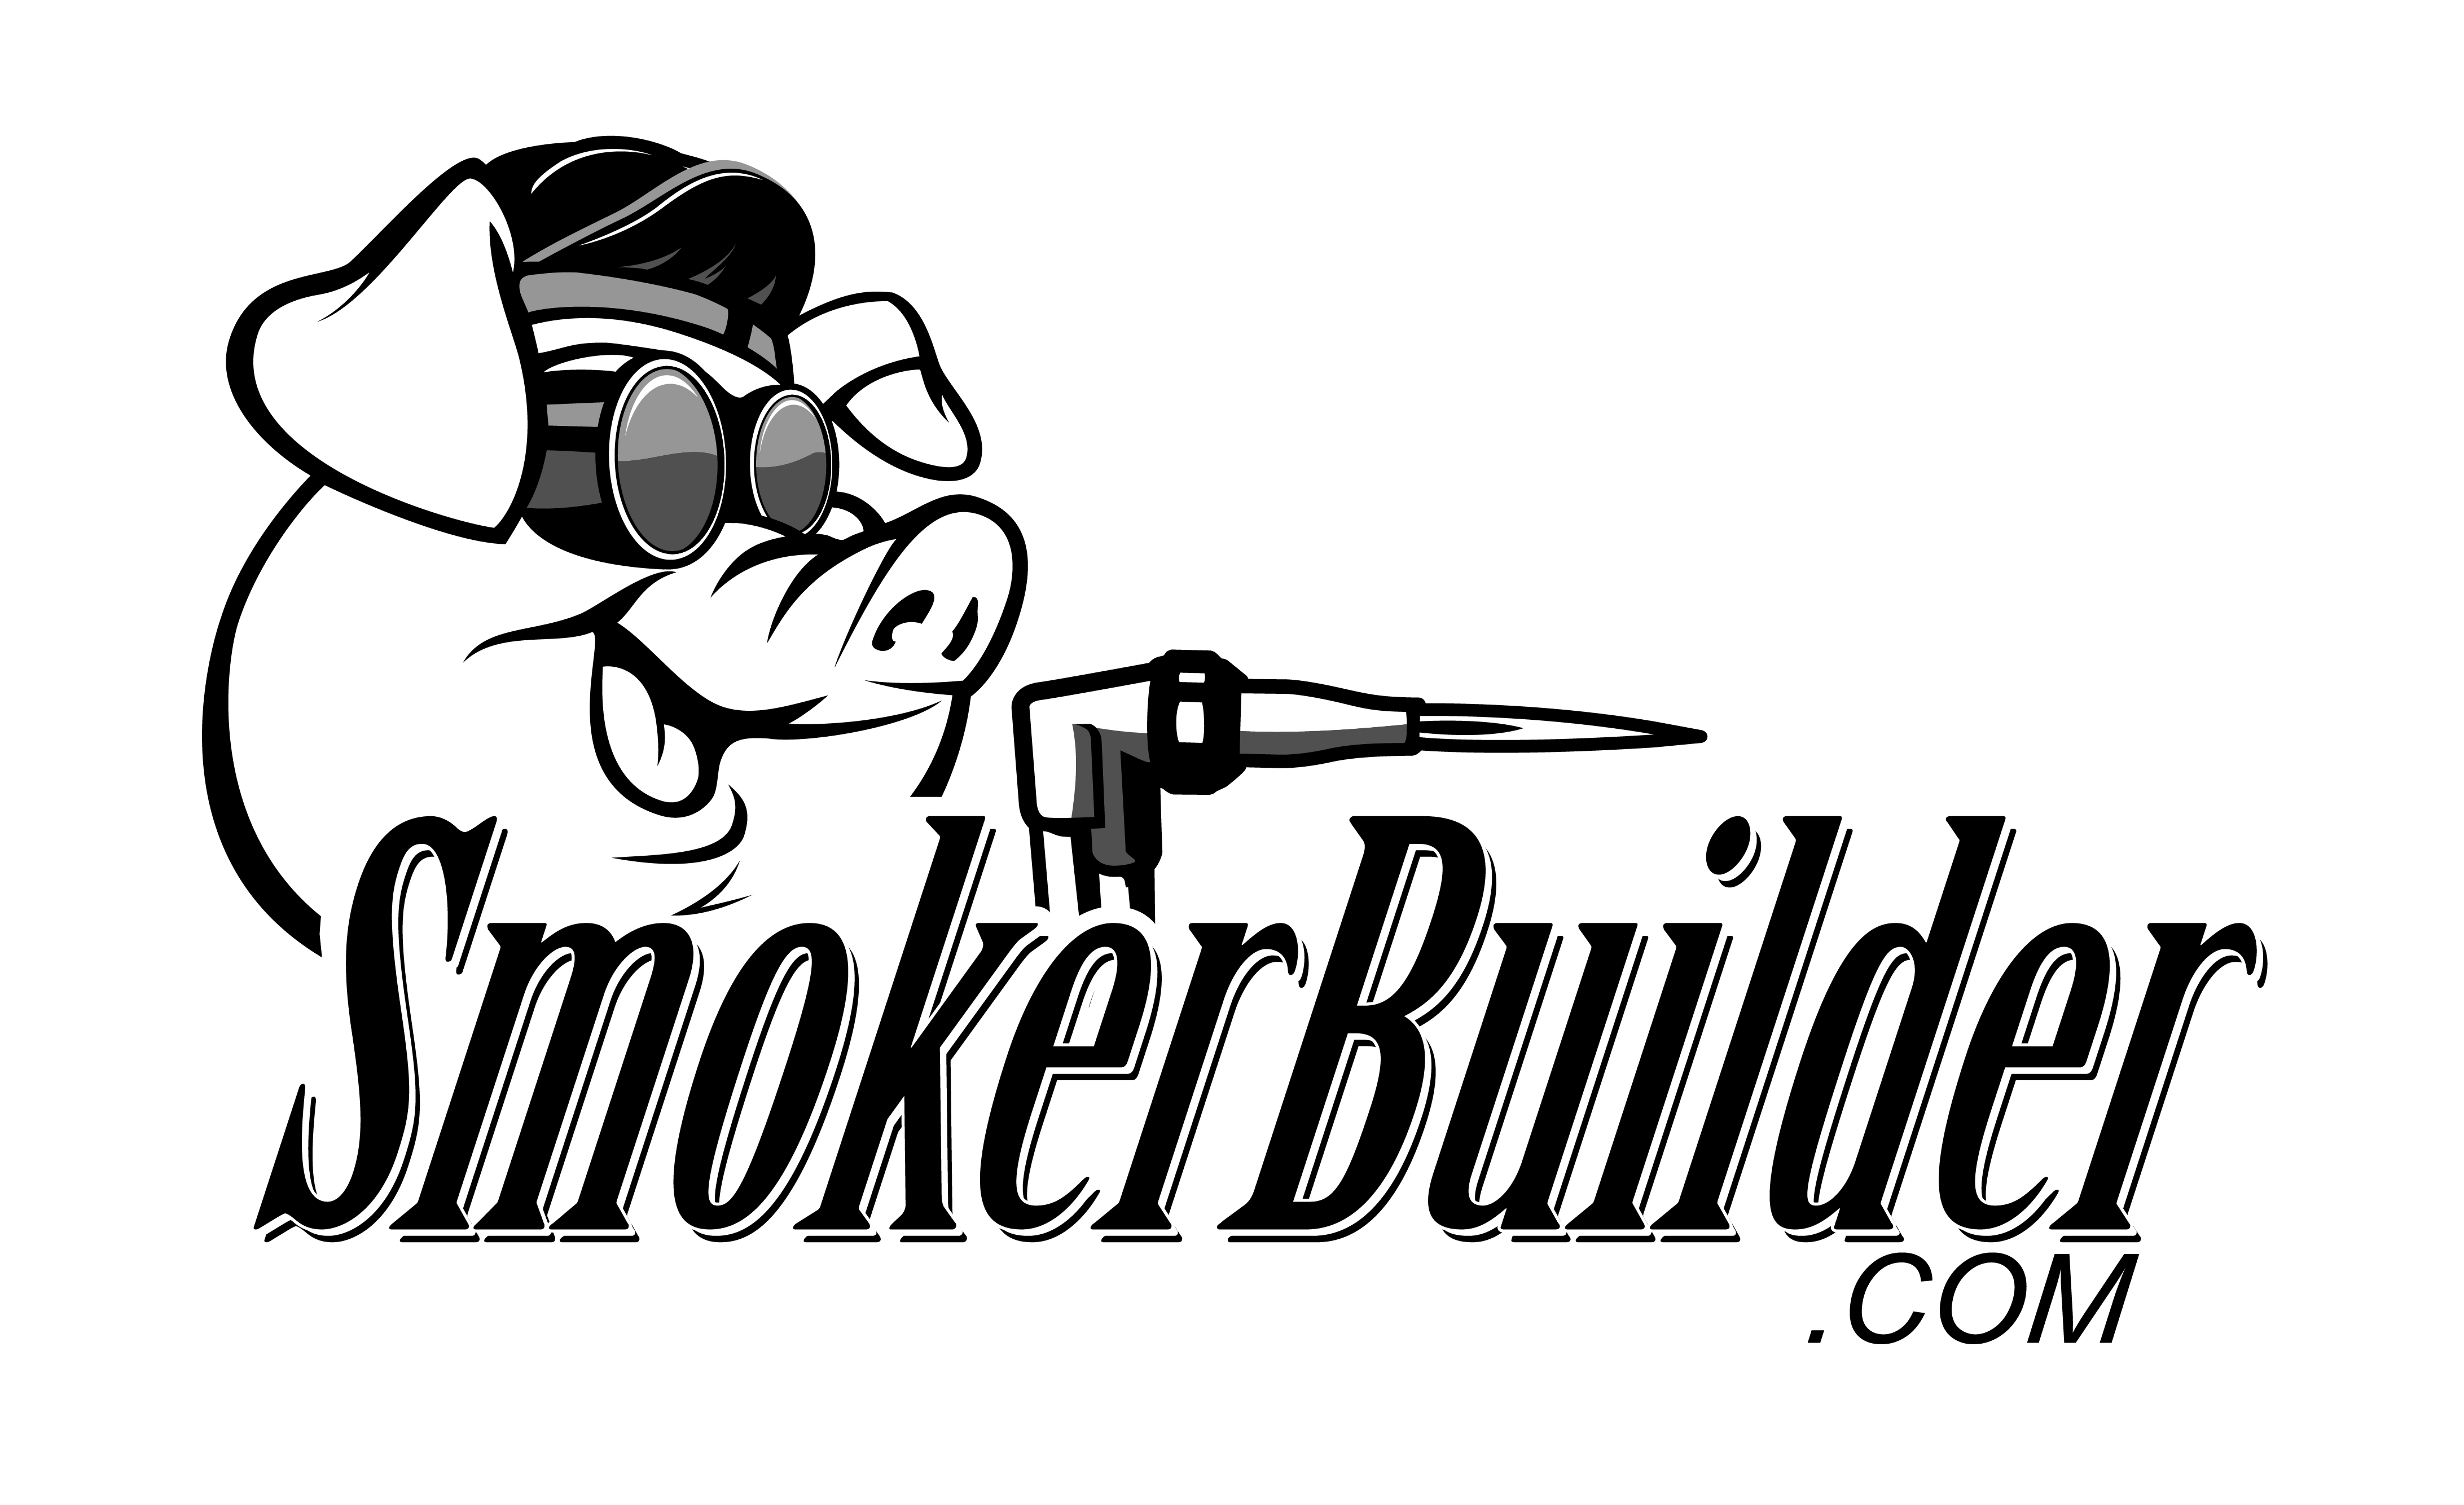 24 by 36 Santa Maria BBQ Grill – SmokerPlans By SmokerBuilder